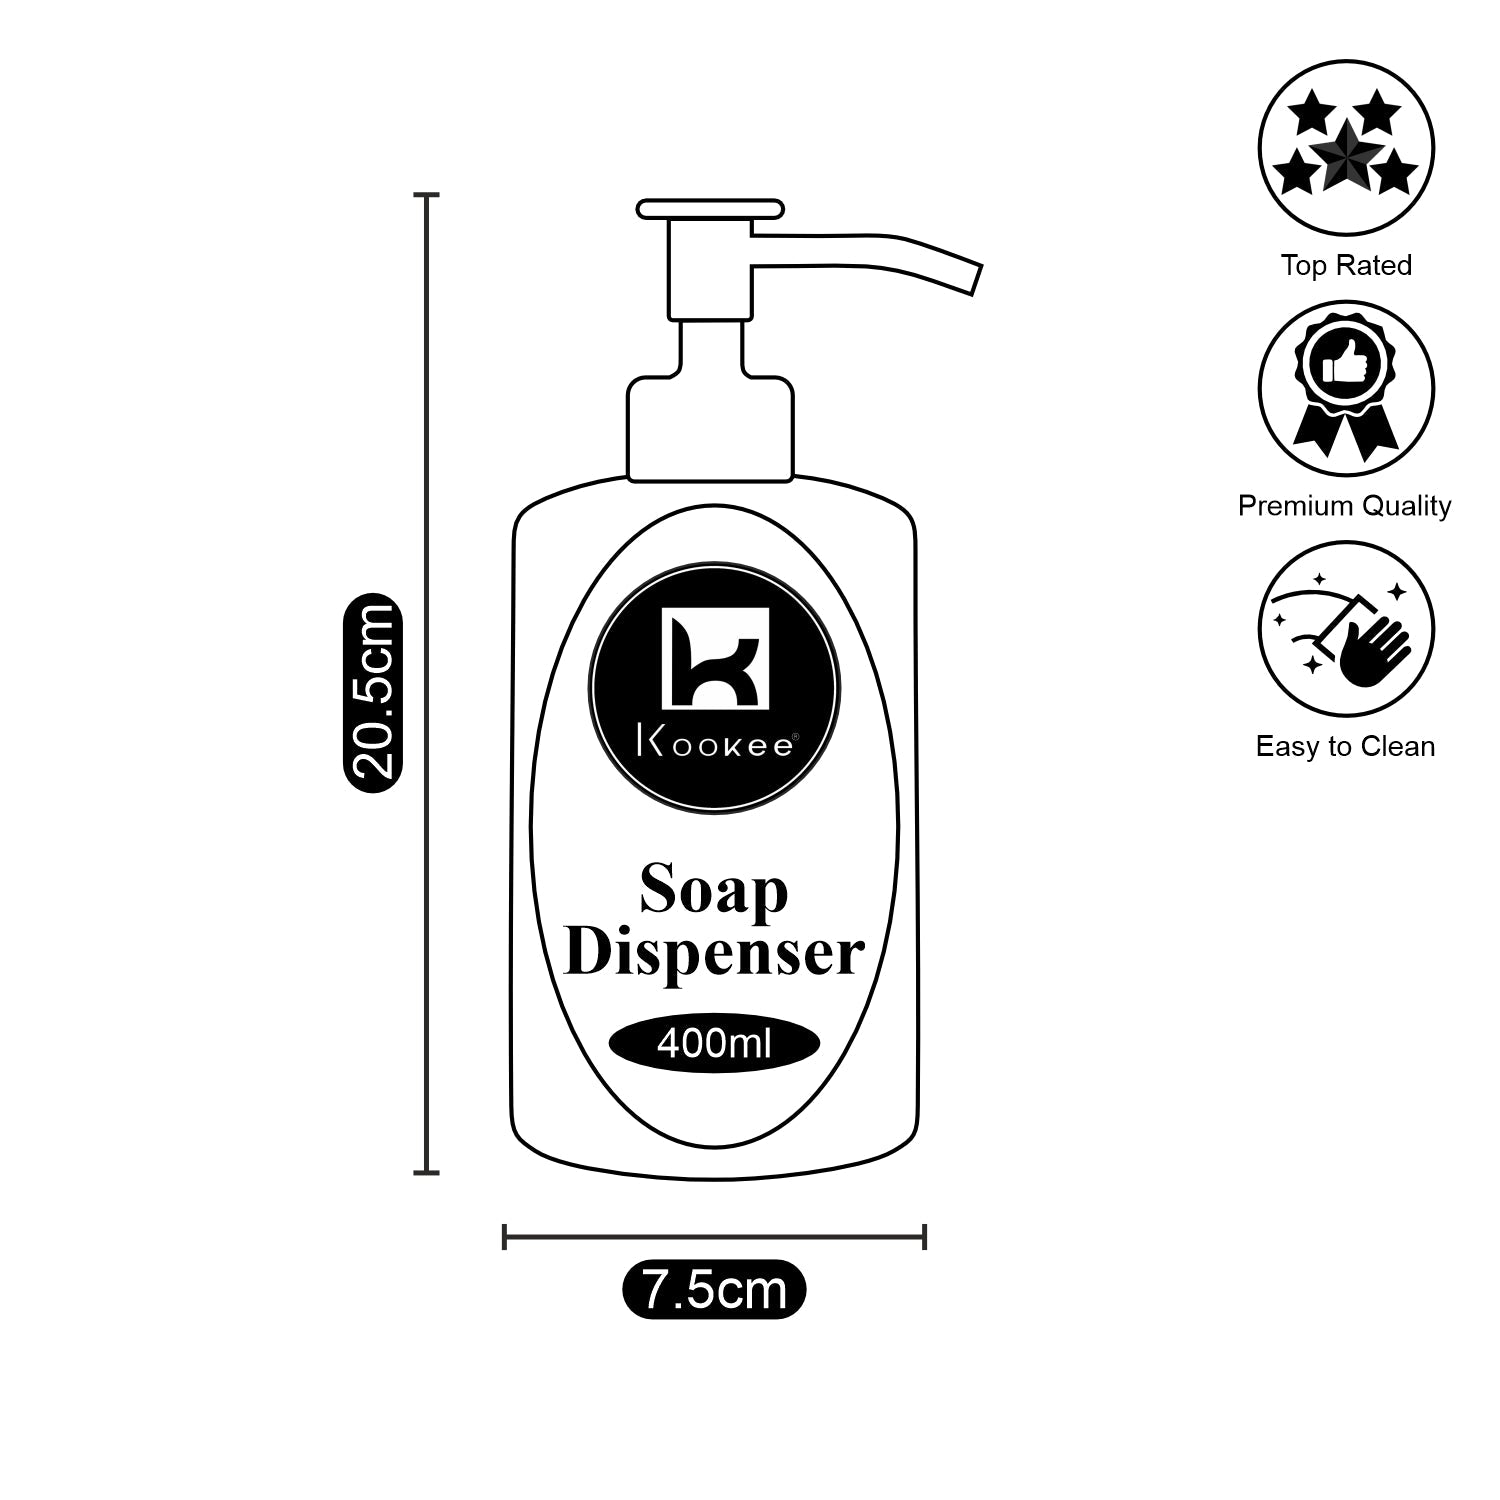 Ceramic Soap Dispenser Pump for Bathroom for Bath Gel, Lotion, Shampoo (10211)